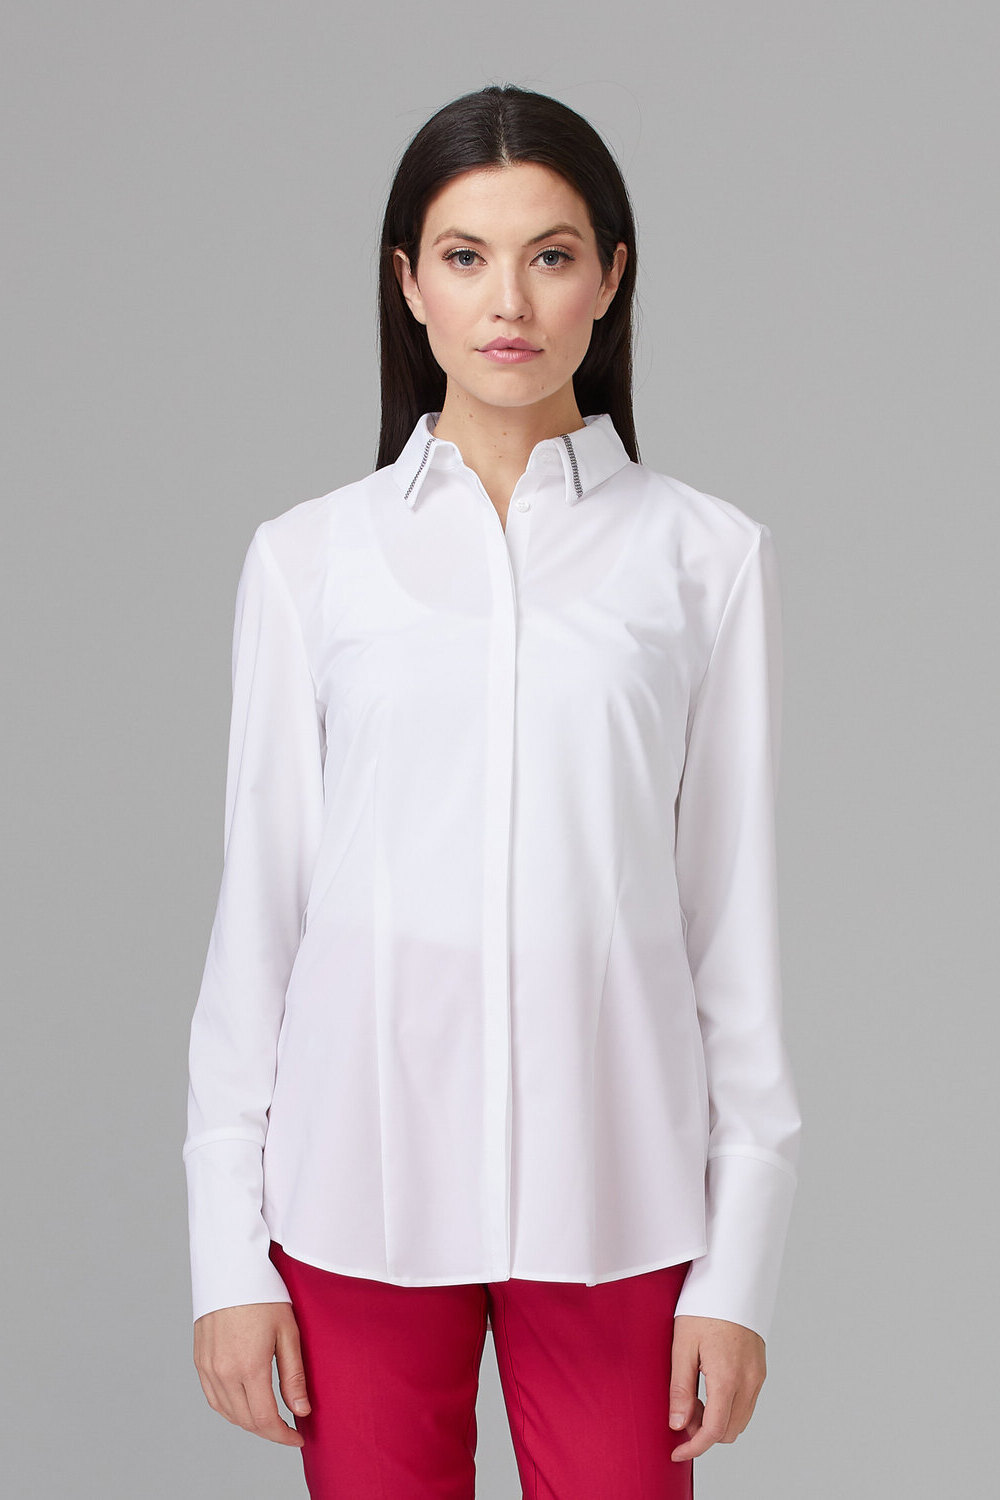 Joseph Ribkoff Shirt Style 201159. White